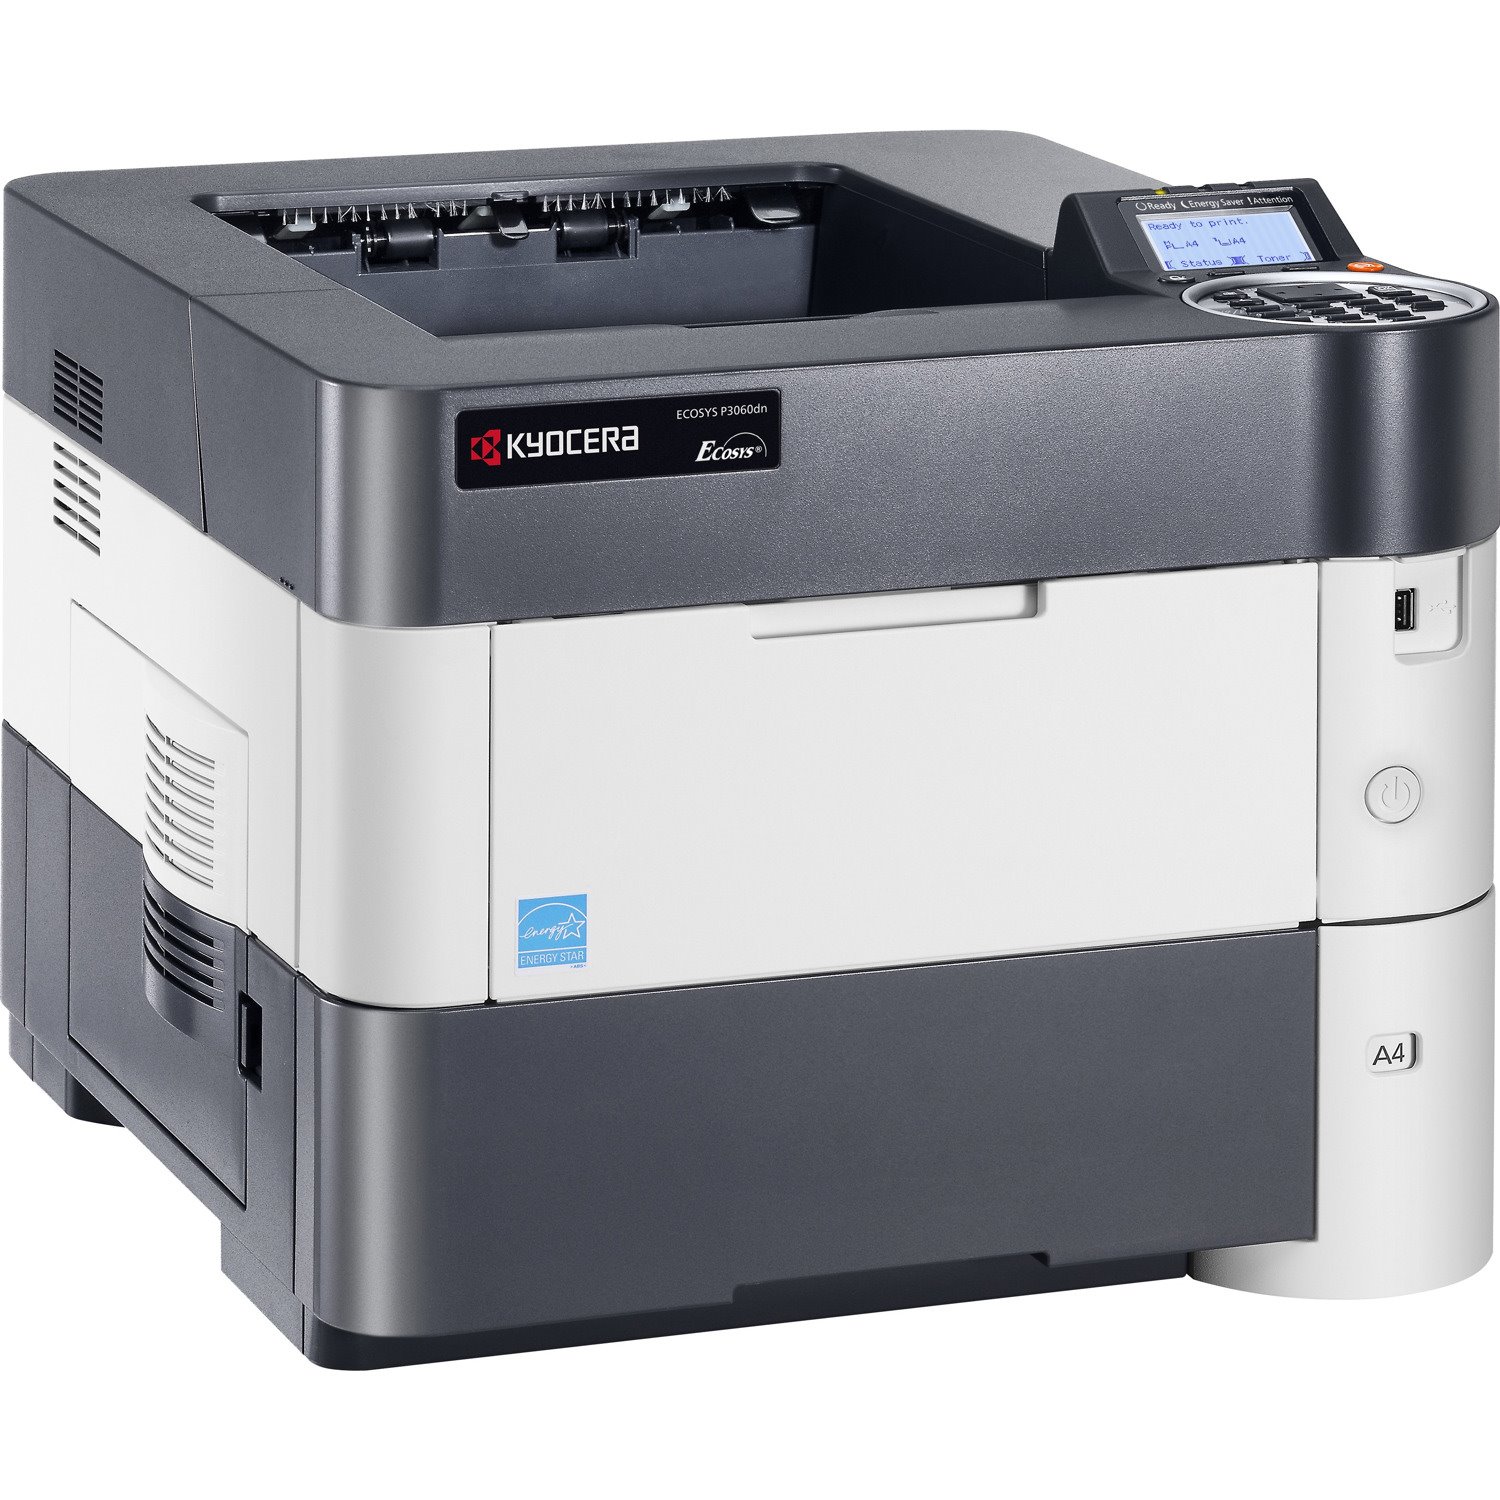 Kyocera Ecosys P3060dn Desktop Laser Printer - Monochrome